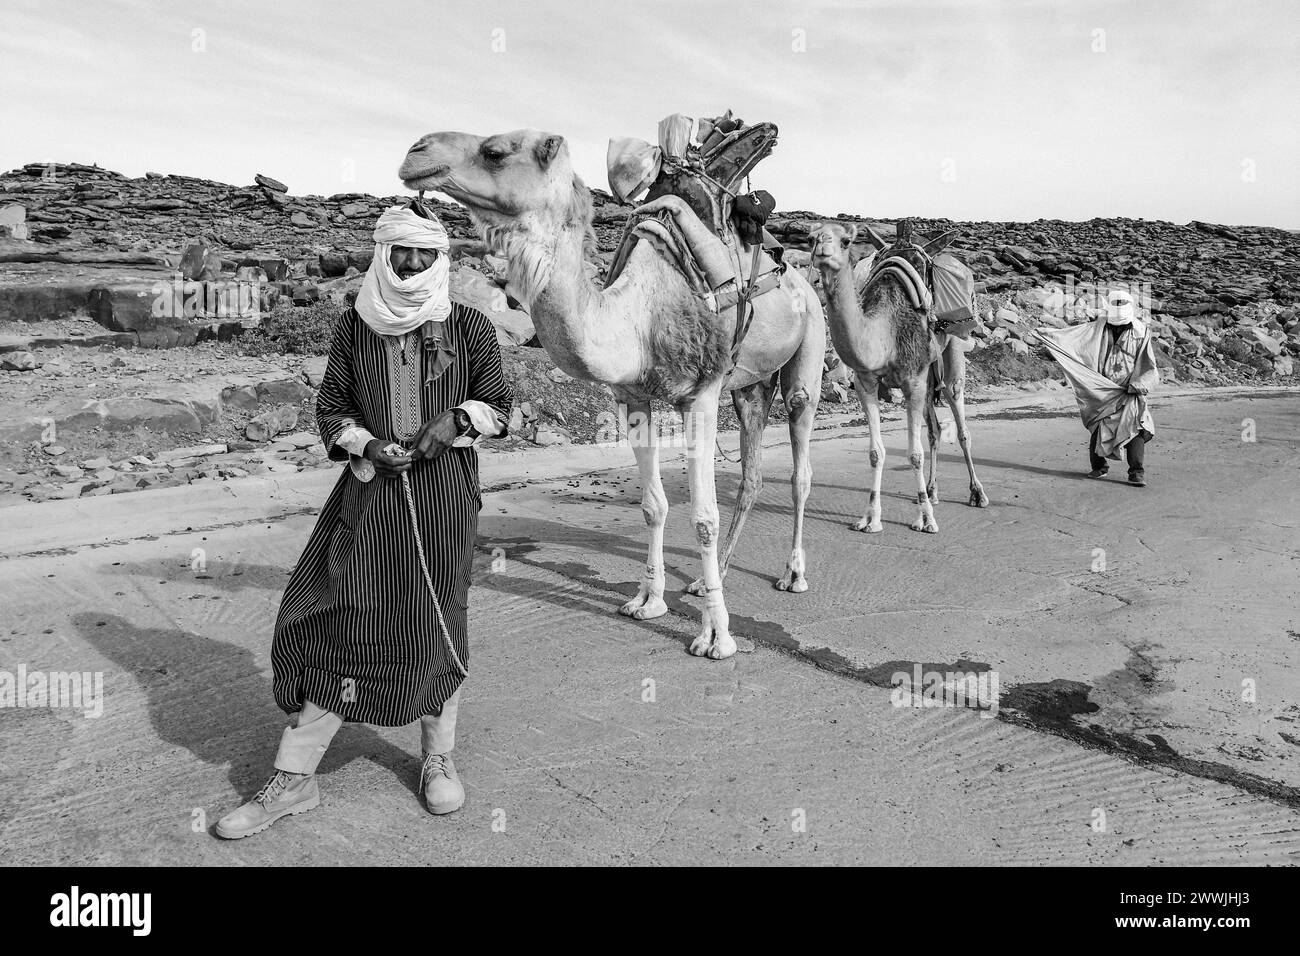 Mauritania, M'Hareth oasi, camel caravan Stock Photo